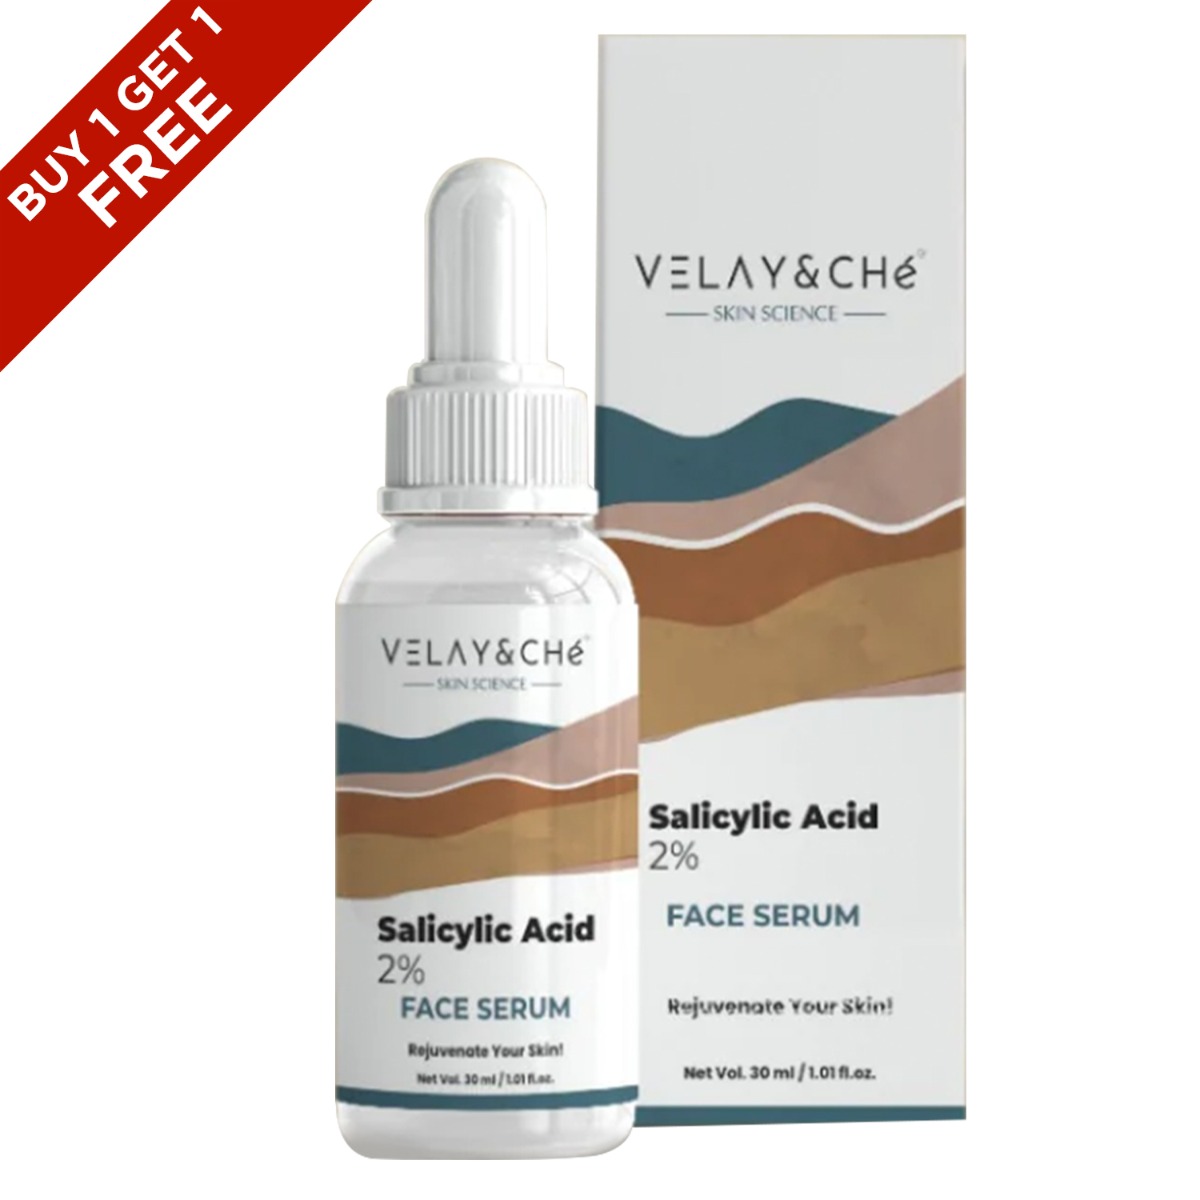 Velay & Che 2% Salicylic Acid Face Serum, 30ml